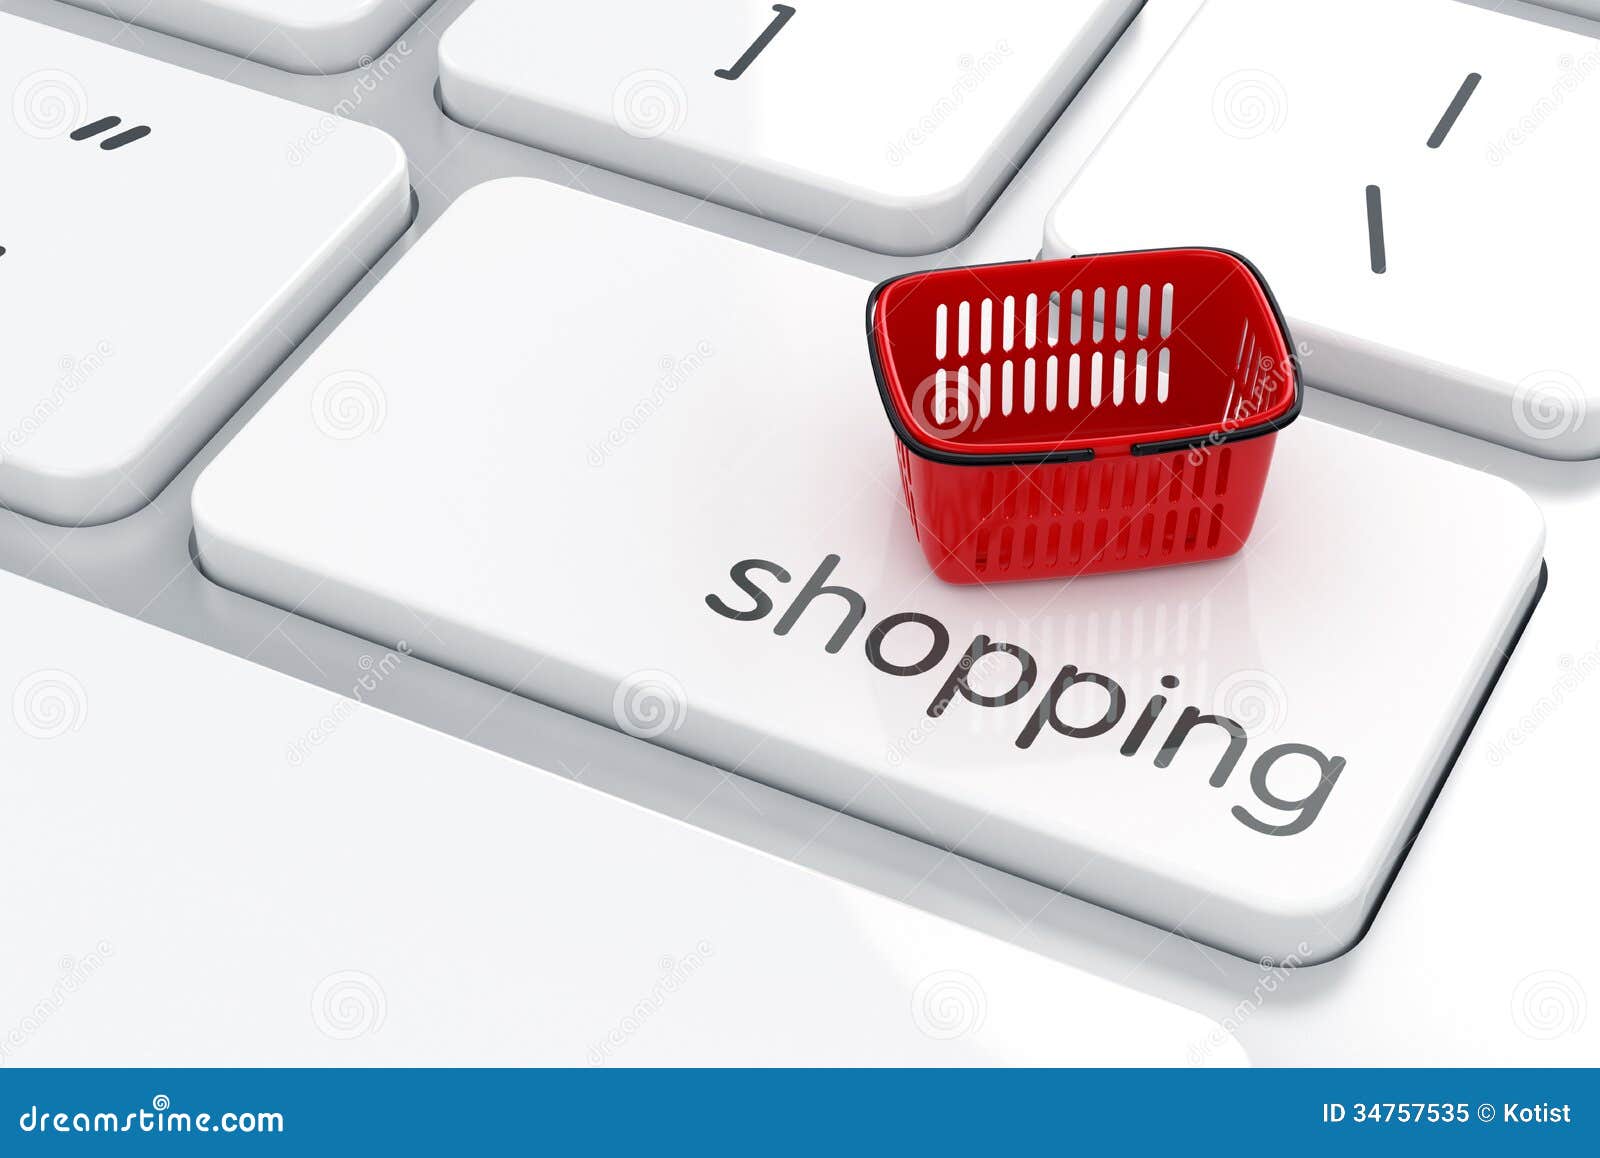 online-shopping-concept-basket-computer-keyboard-34757535.jpg